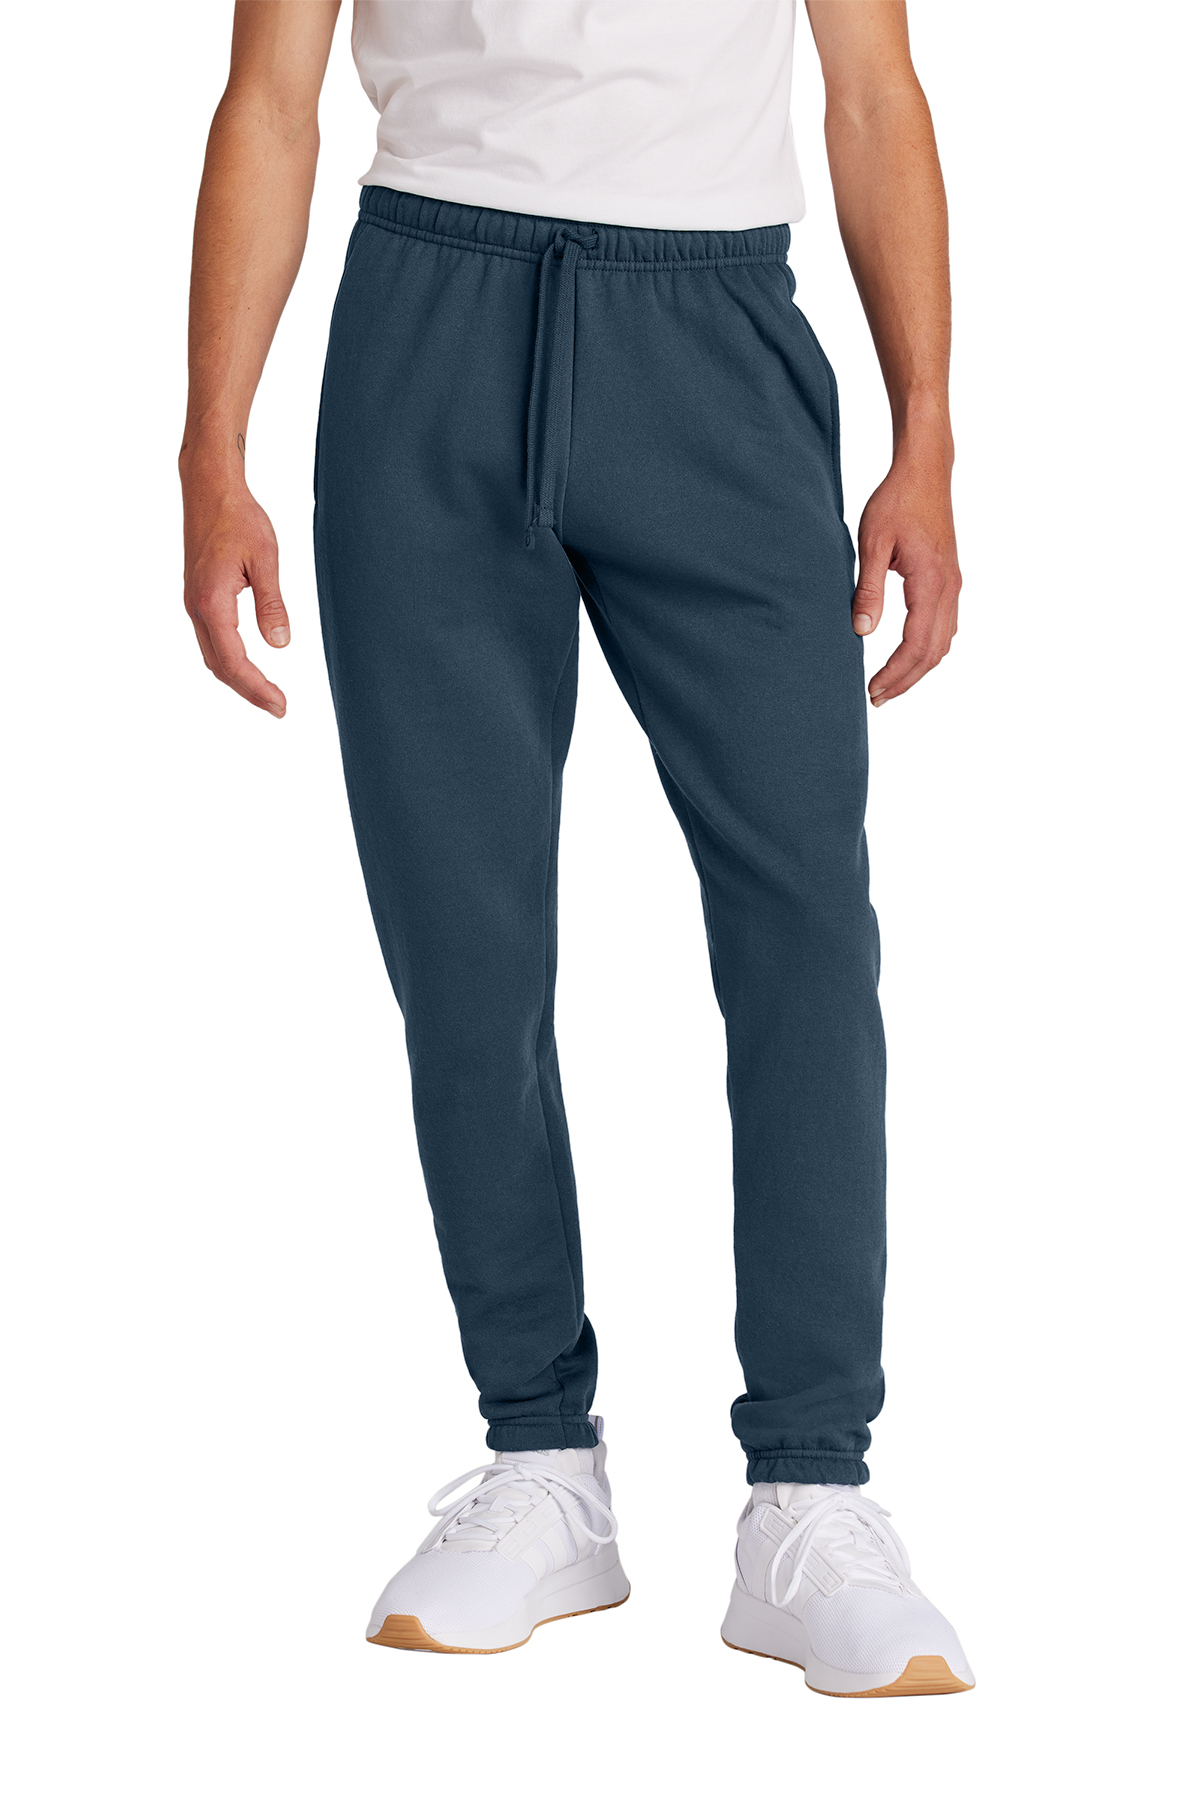 Men's Blue Cozy Fleece Sweatpants - Blue